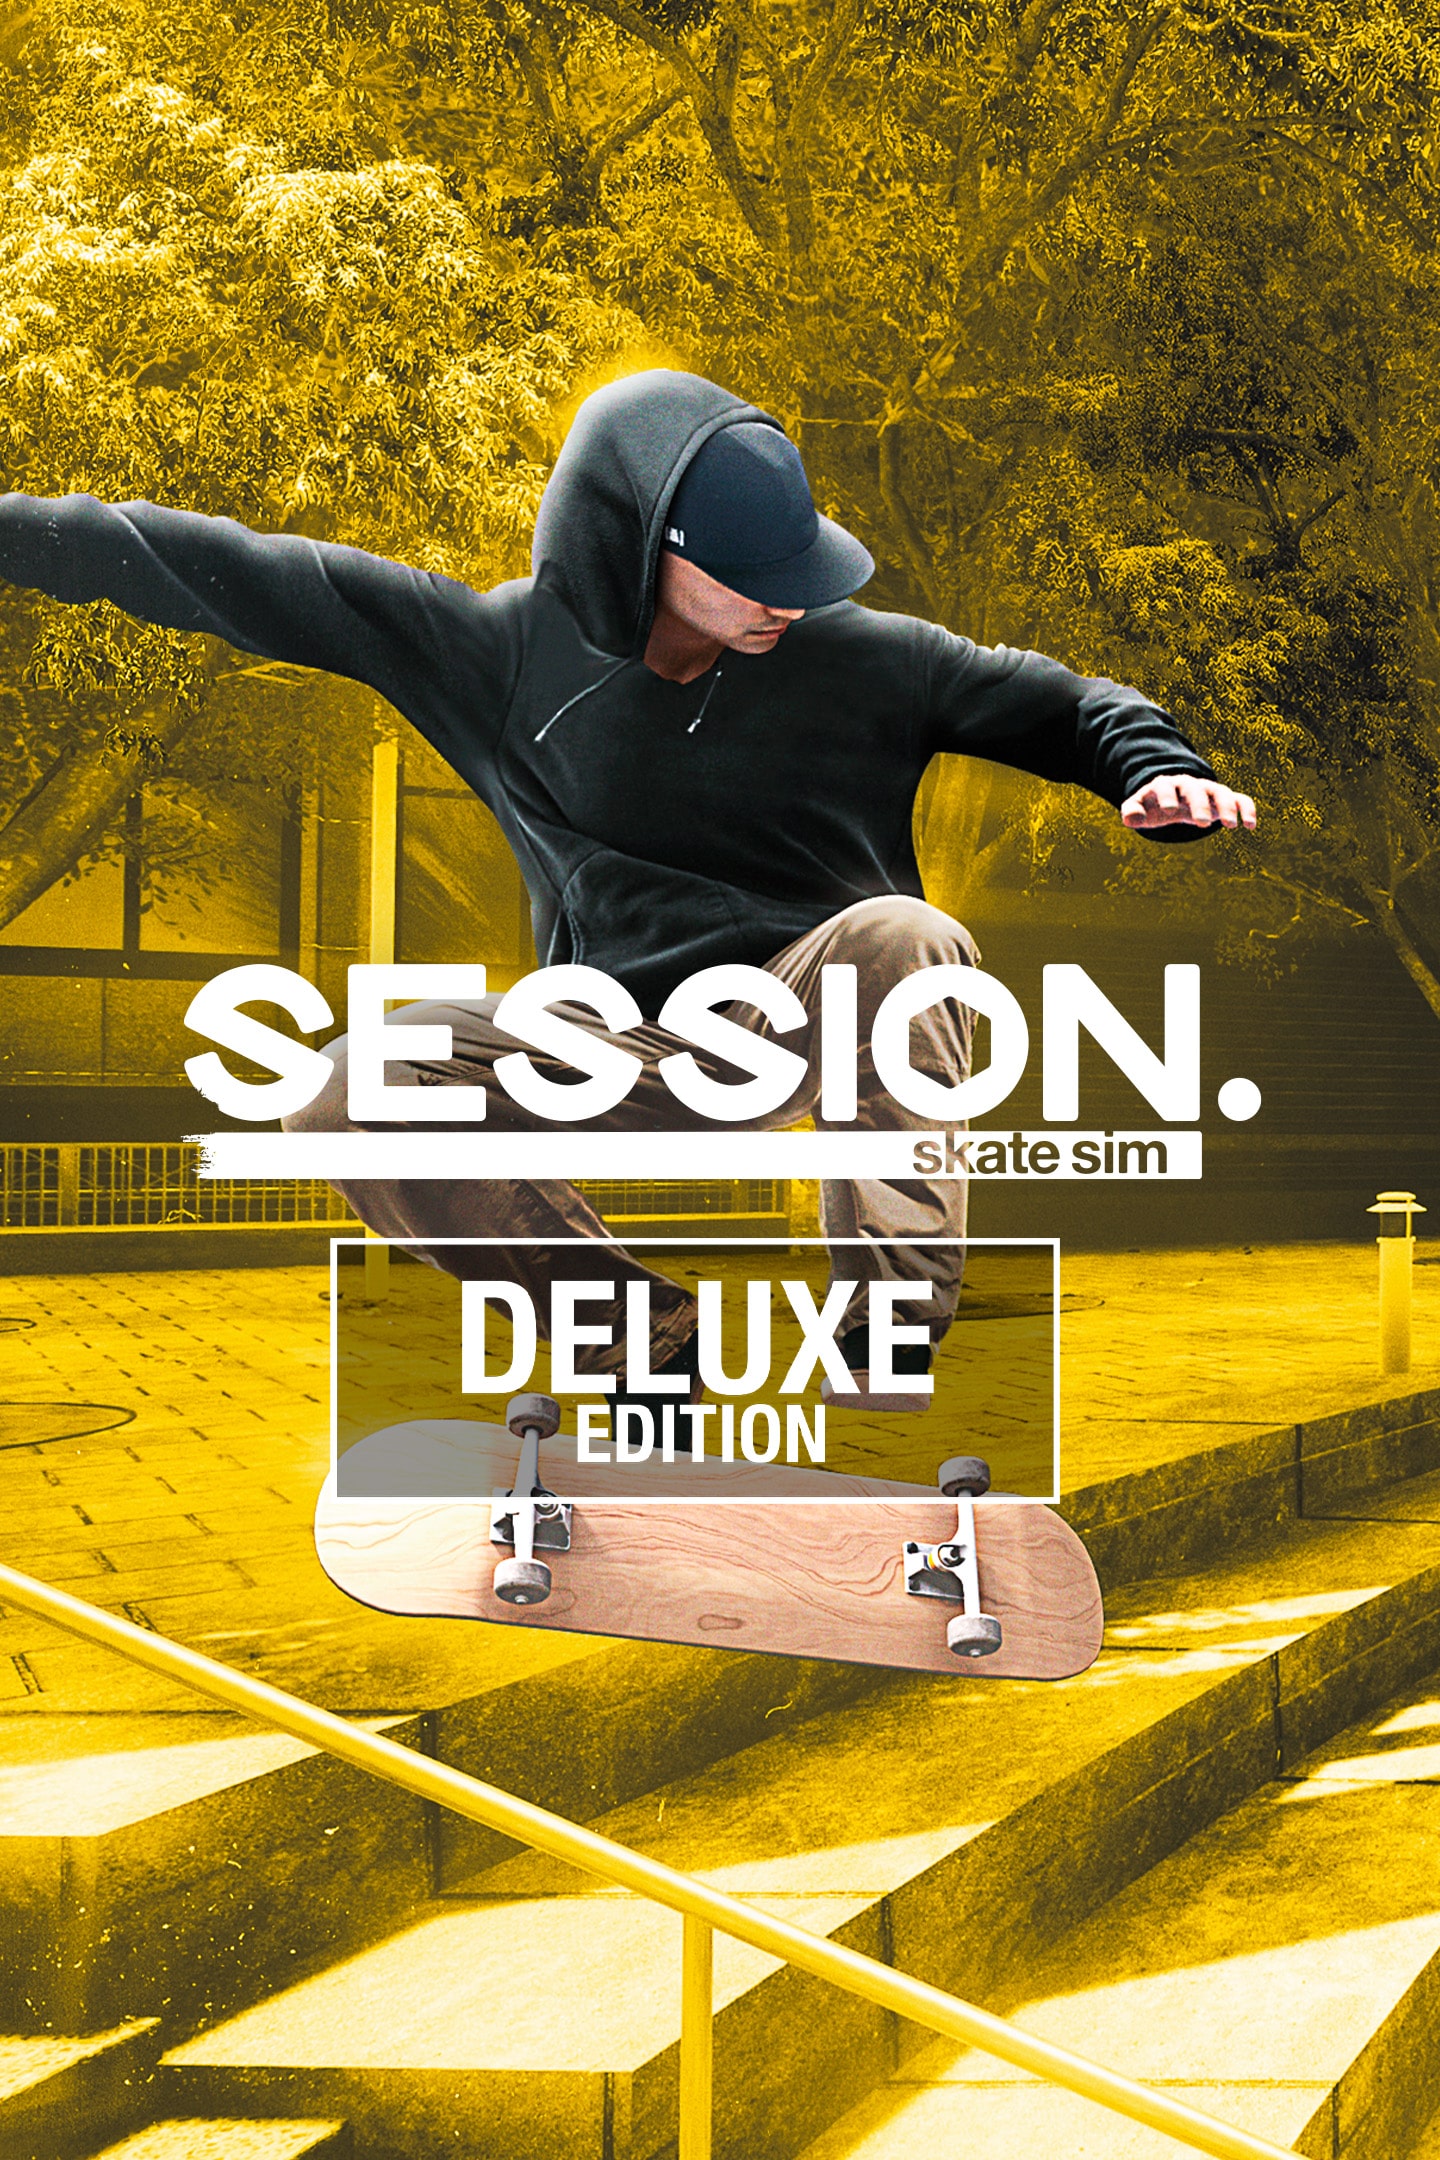 Jogo Session: Skate Sim - Ps5